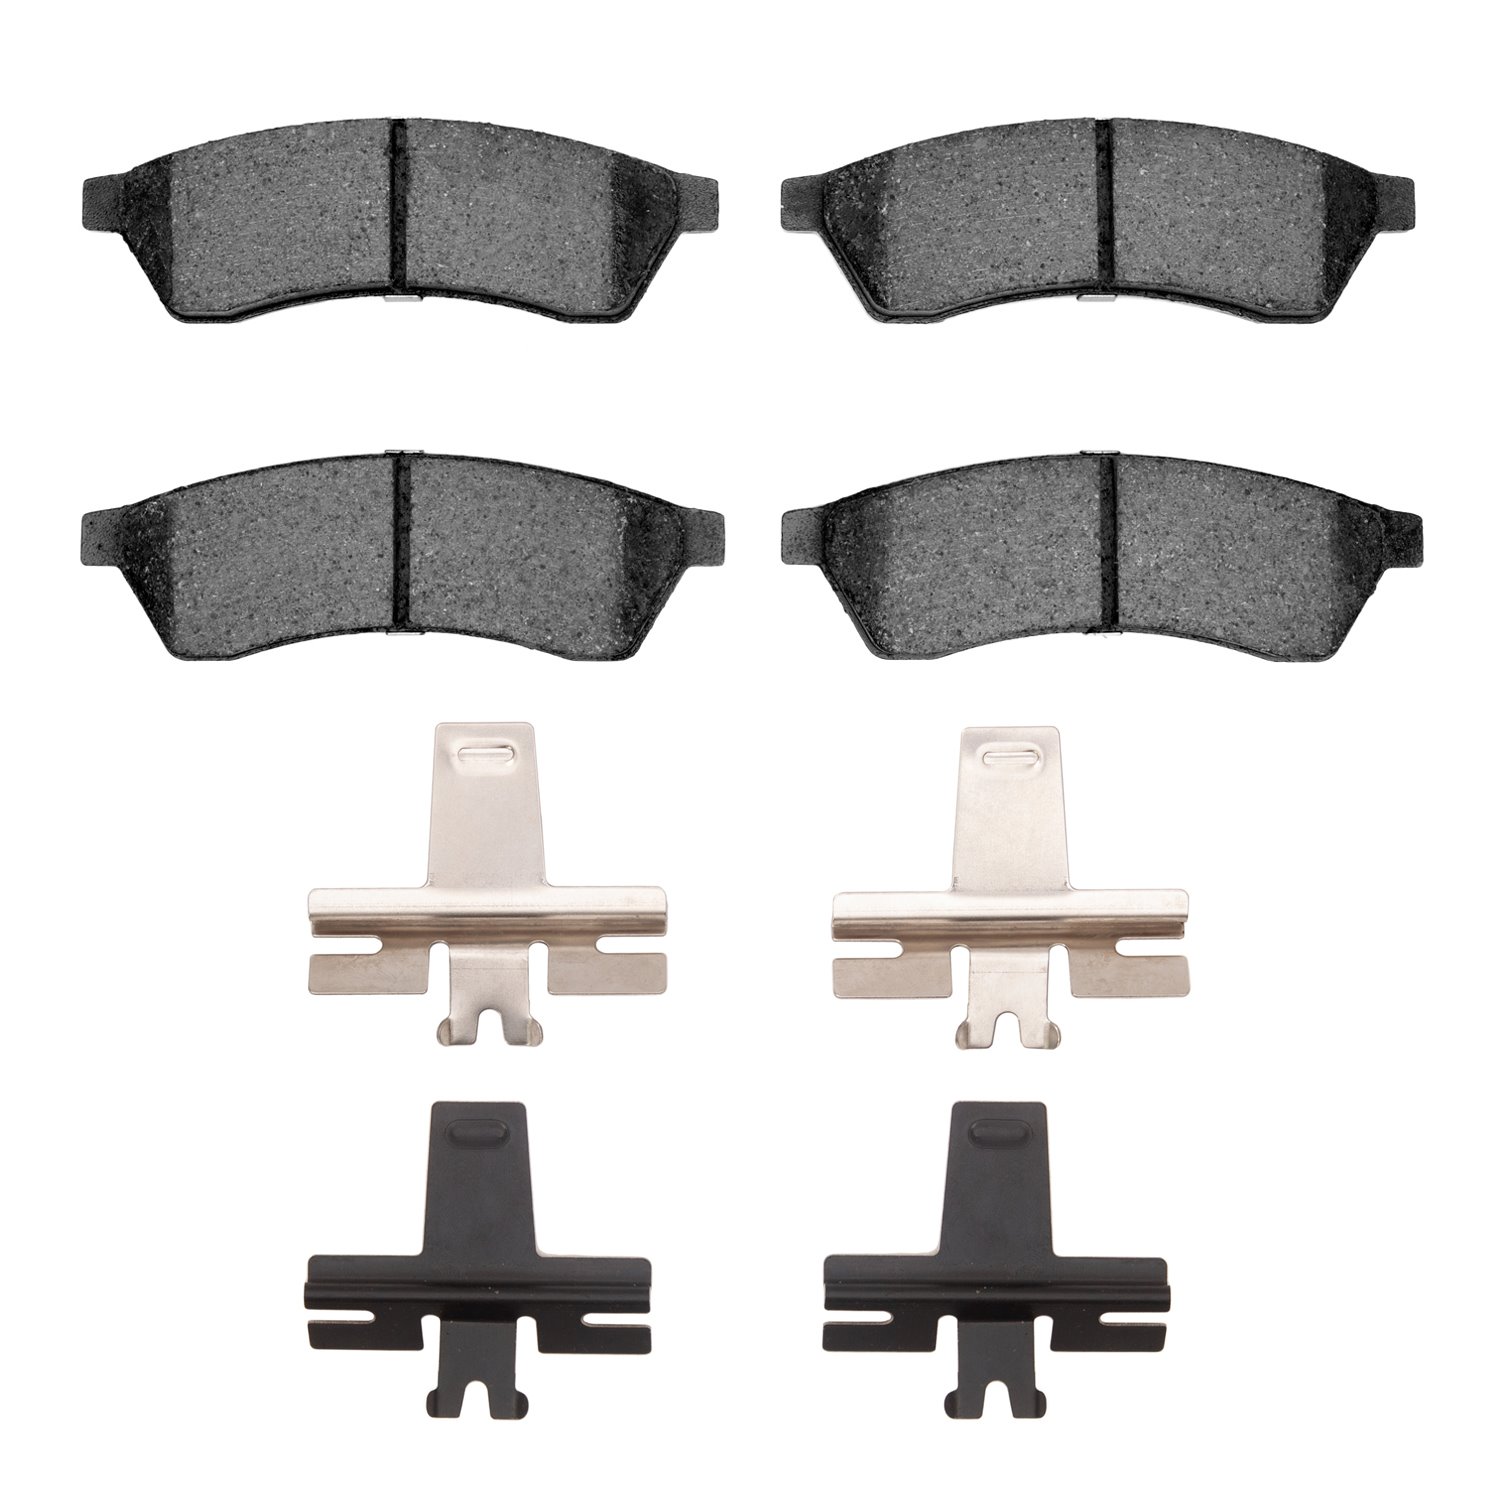 1310-1030-01 3000-Series Ceramic Brake Pads & Hardware Kit, 2004-2010 Multiple Makes/Models, Position: Rear